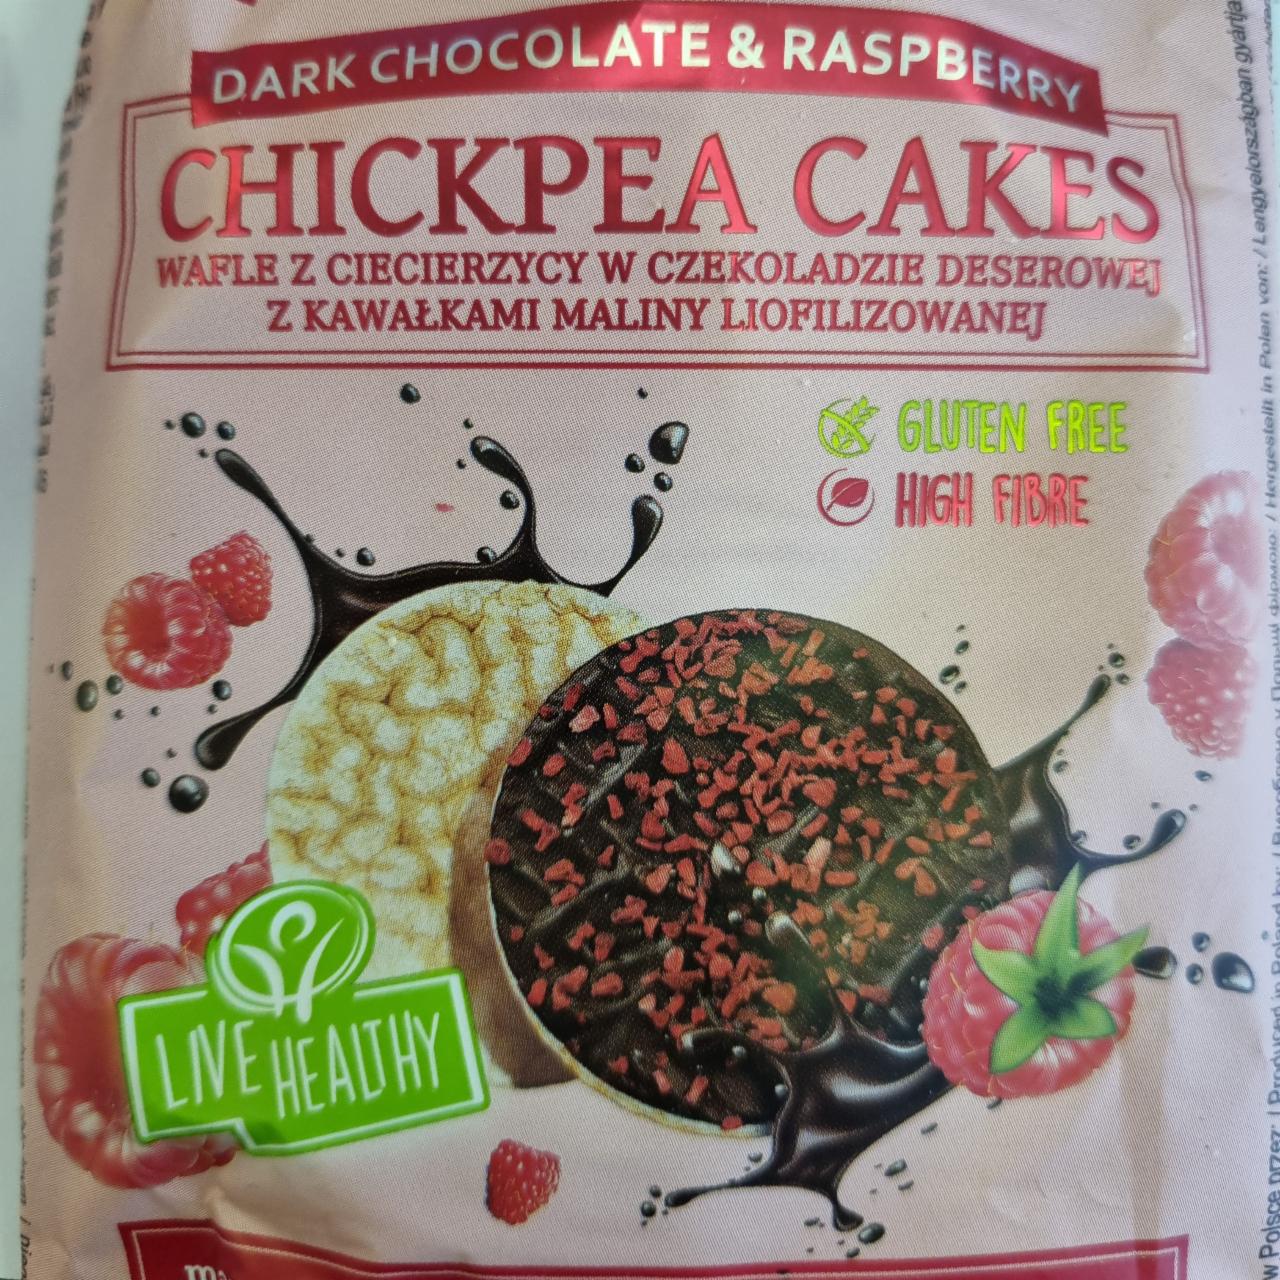 Képek - Chickpea cakes Dark chocolate & raspberry Lestello